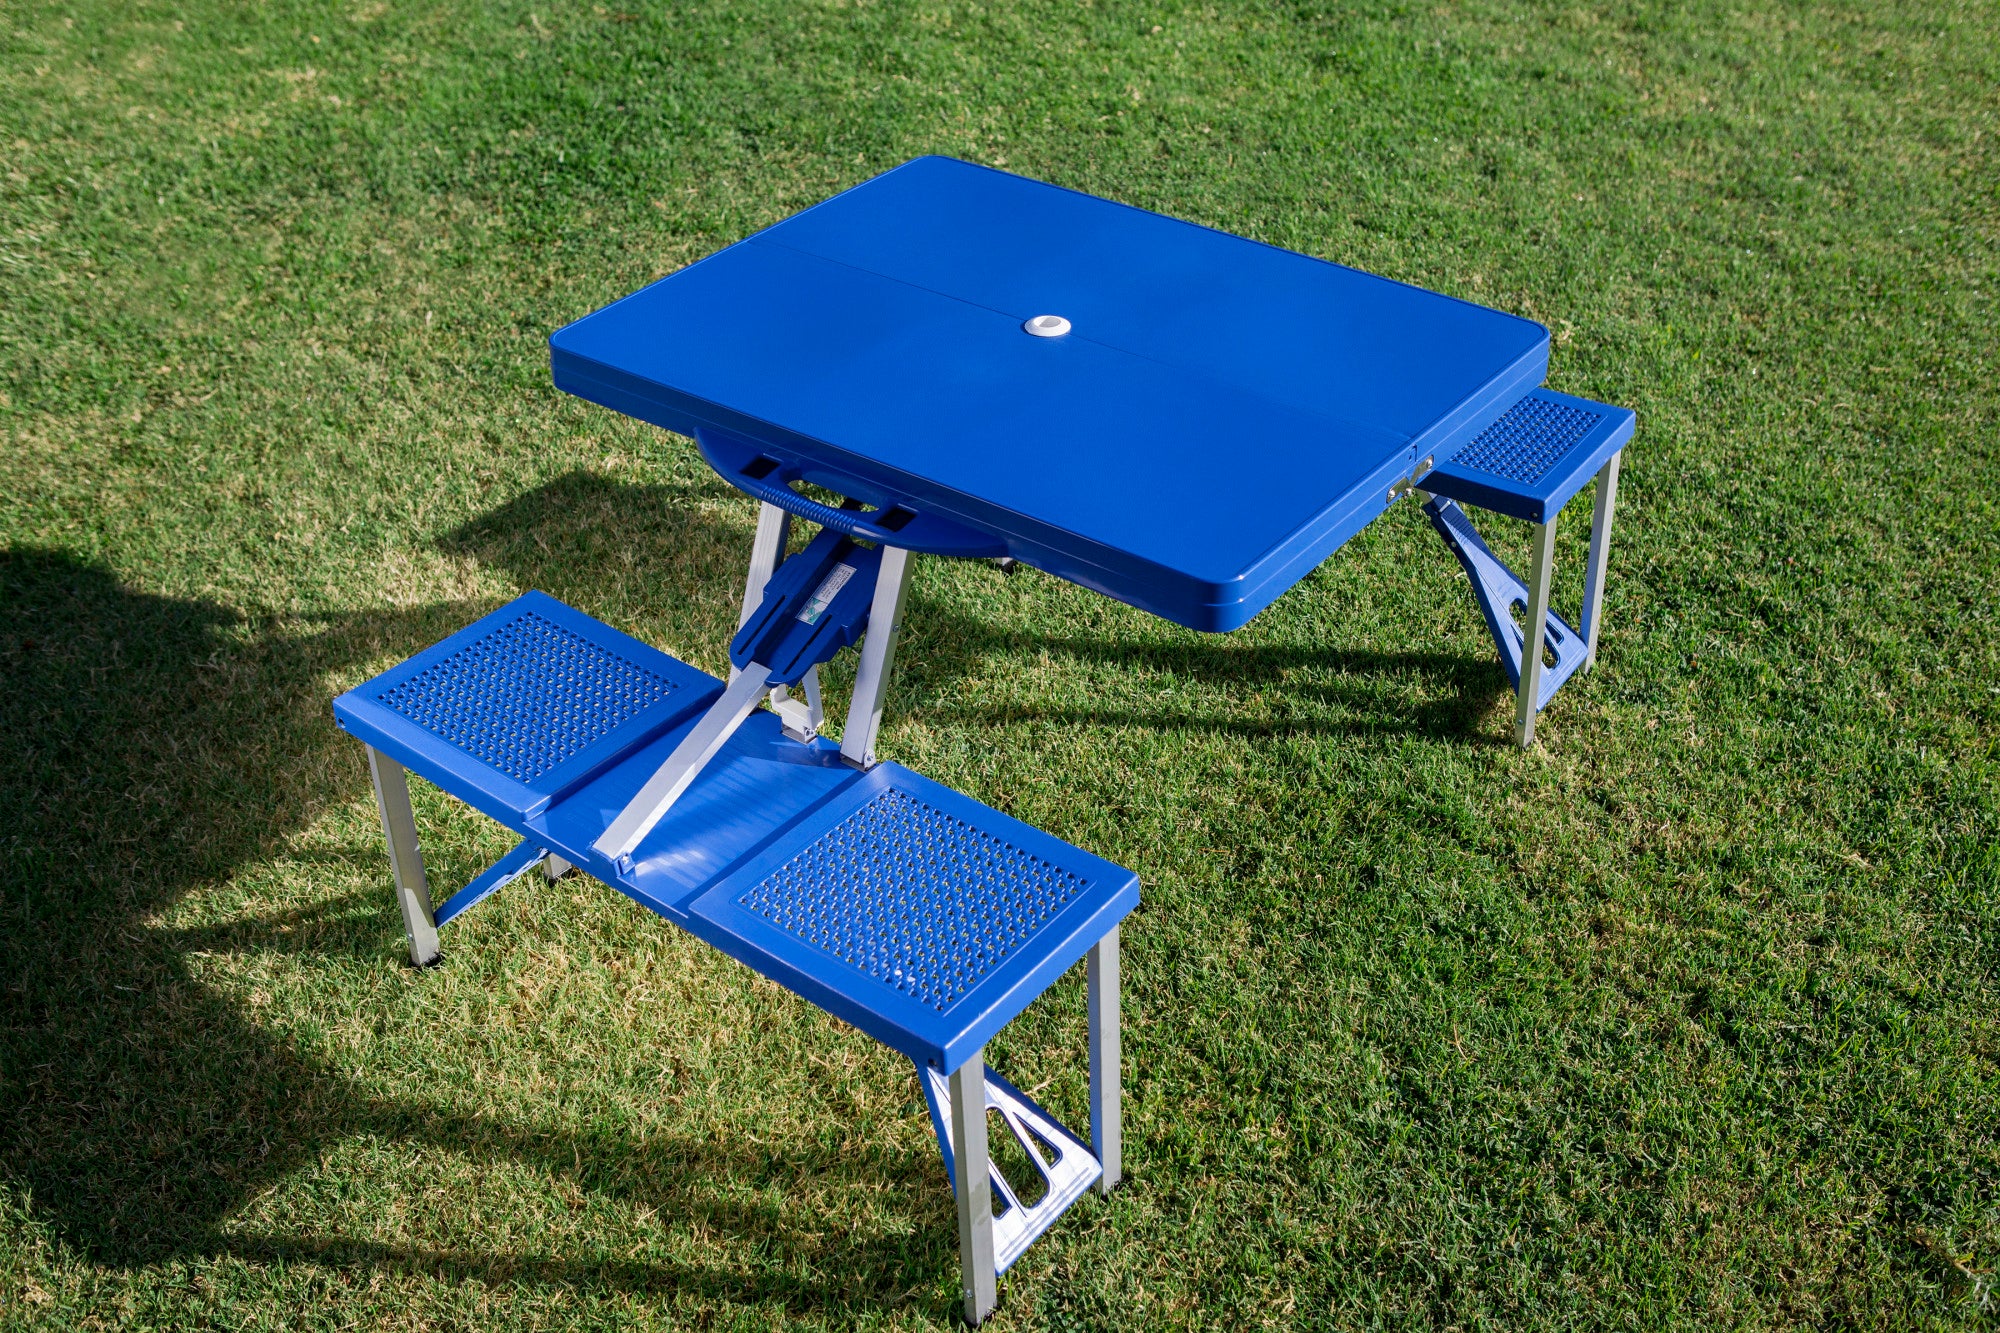 Chicago Cubs Baseball Diamond - Picnic Table Portable Folding Table with Seats